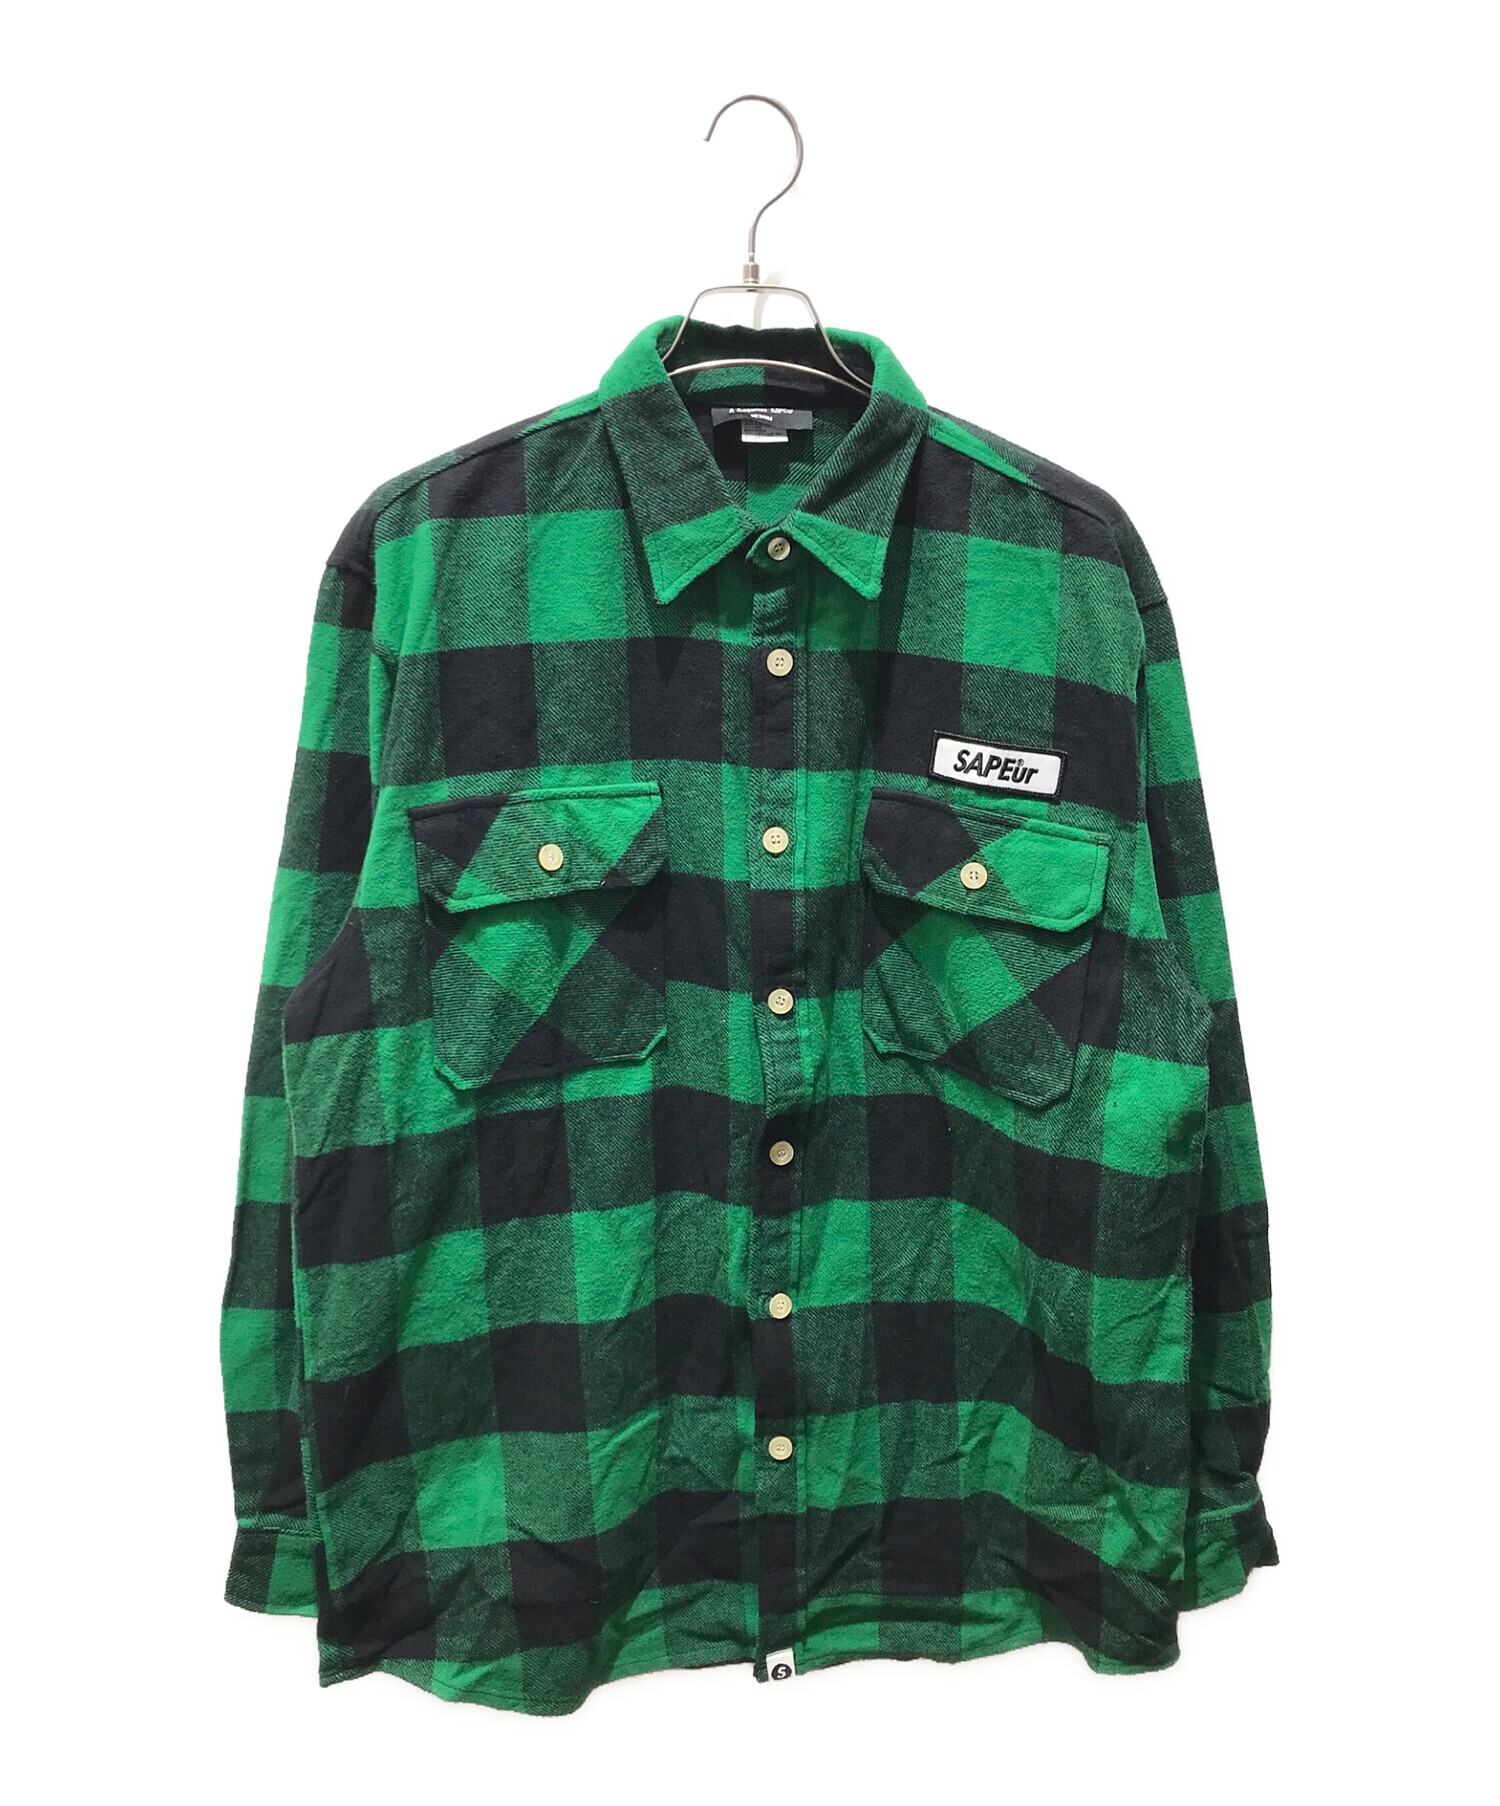 SAPEur (サプール) ブロックチェックシャツ グリーン サイズ:M